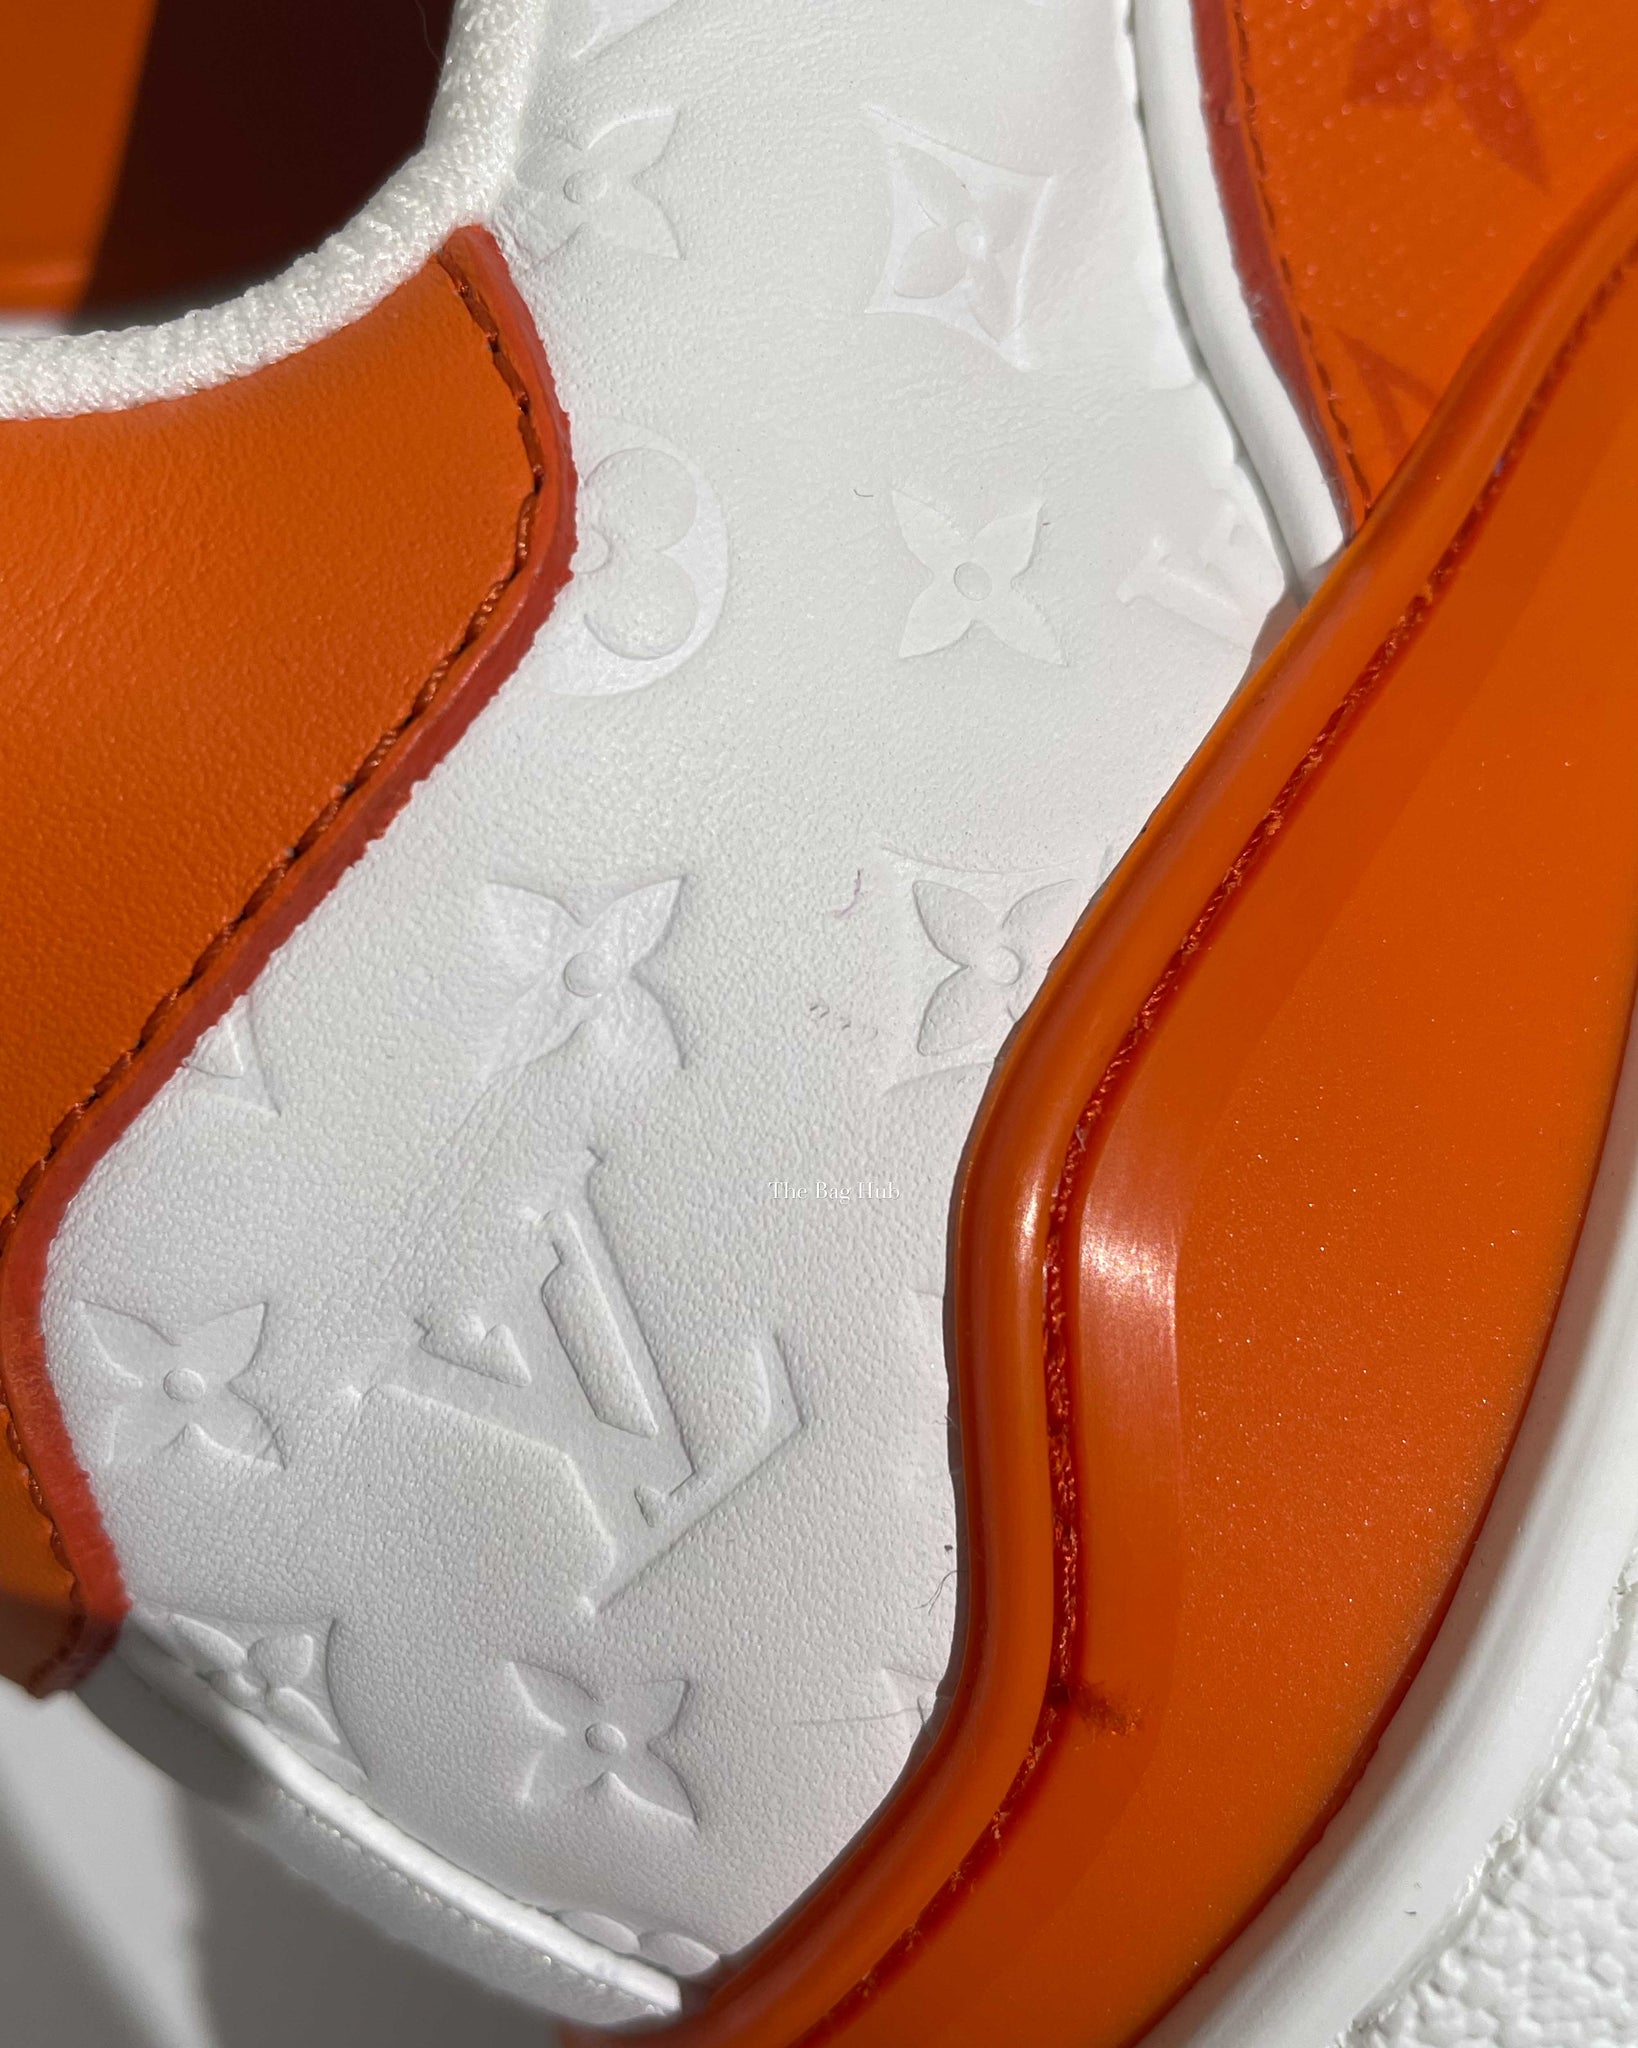 Louis Vuitton LV Trainer Sneaker Orange. Size 10.0